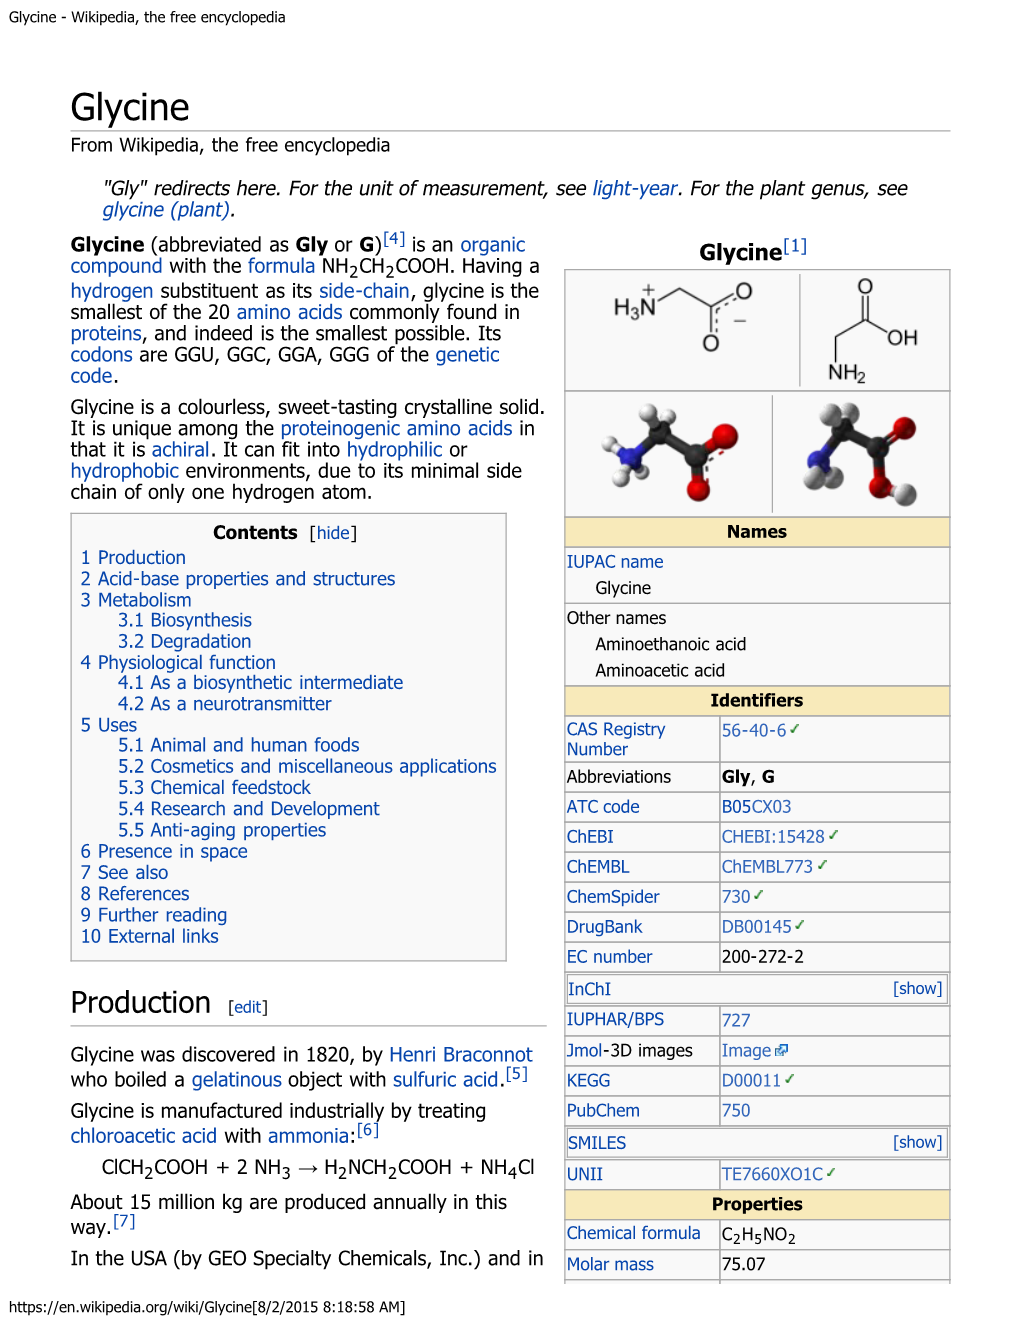 Glycine - Wikipedia, the Free Encyclopedia